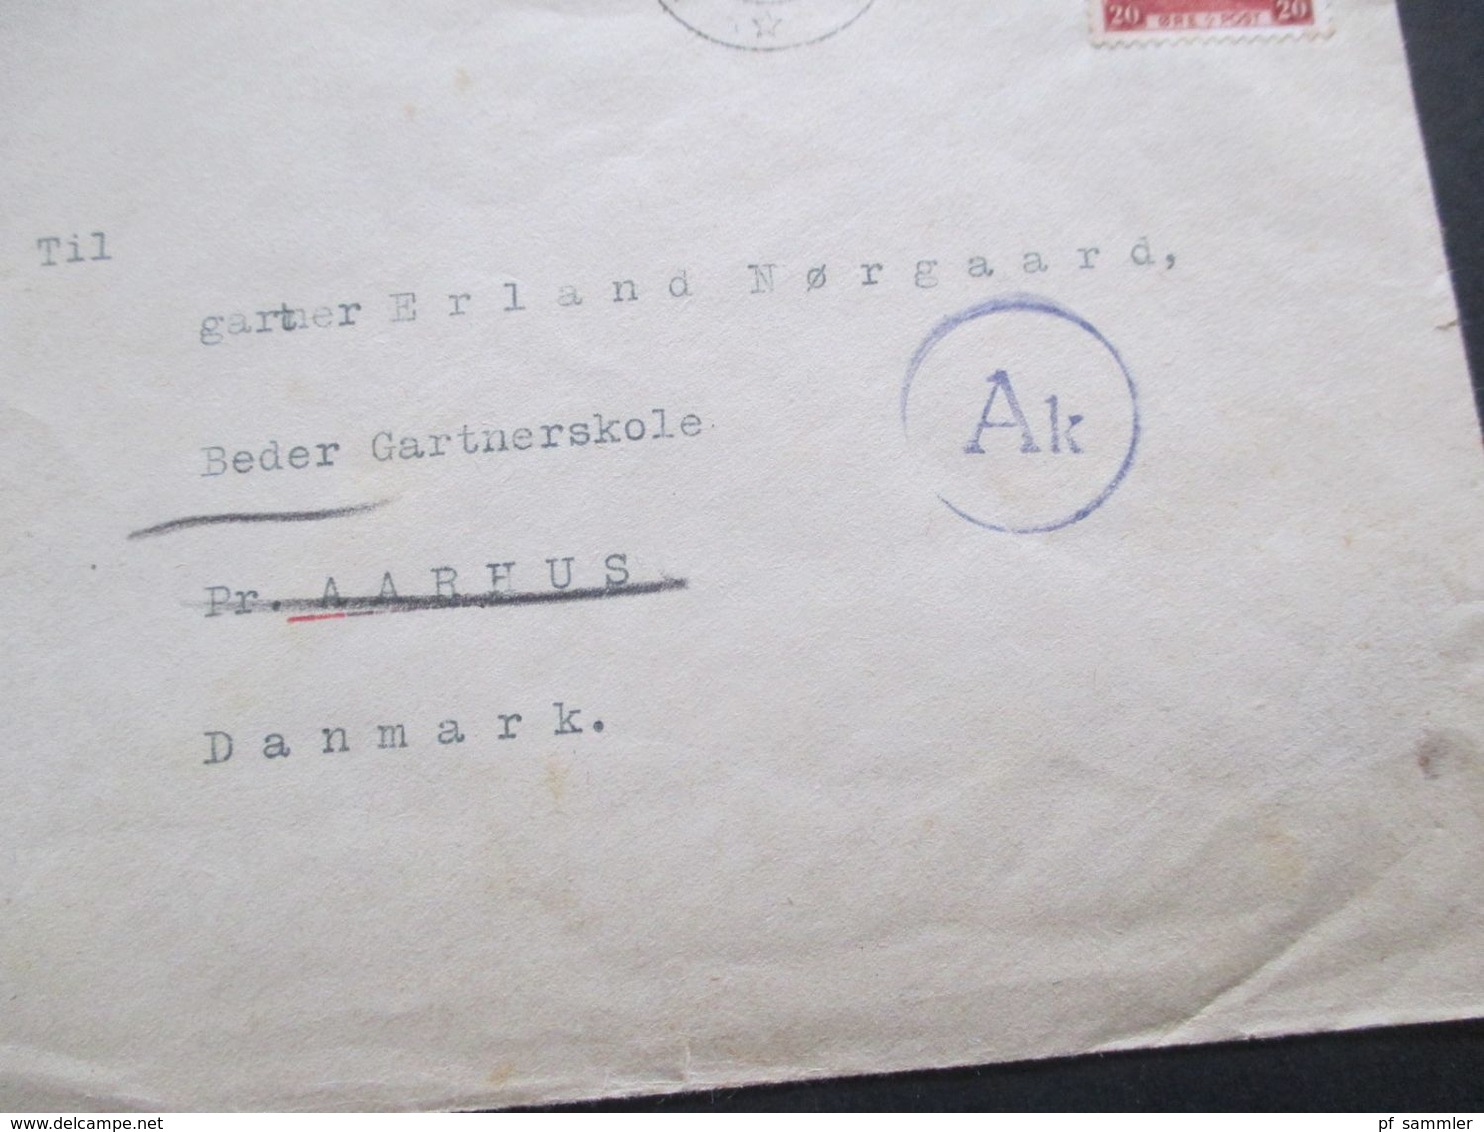 Dänemark 1941 Brief Stempel Landbrukshogskolen Ias Innerhalb Dänemarks Mit OKW Zensur / Zensurstereifen + Stempel - Briefe U. Dokumente